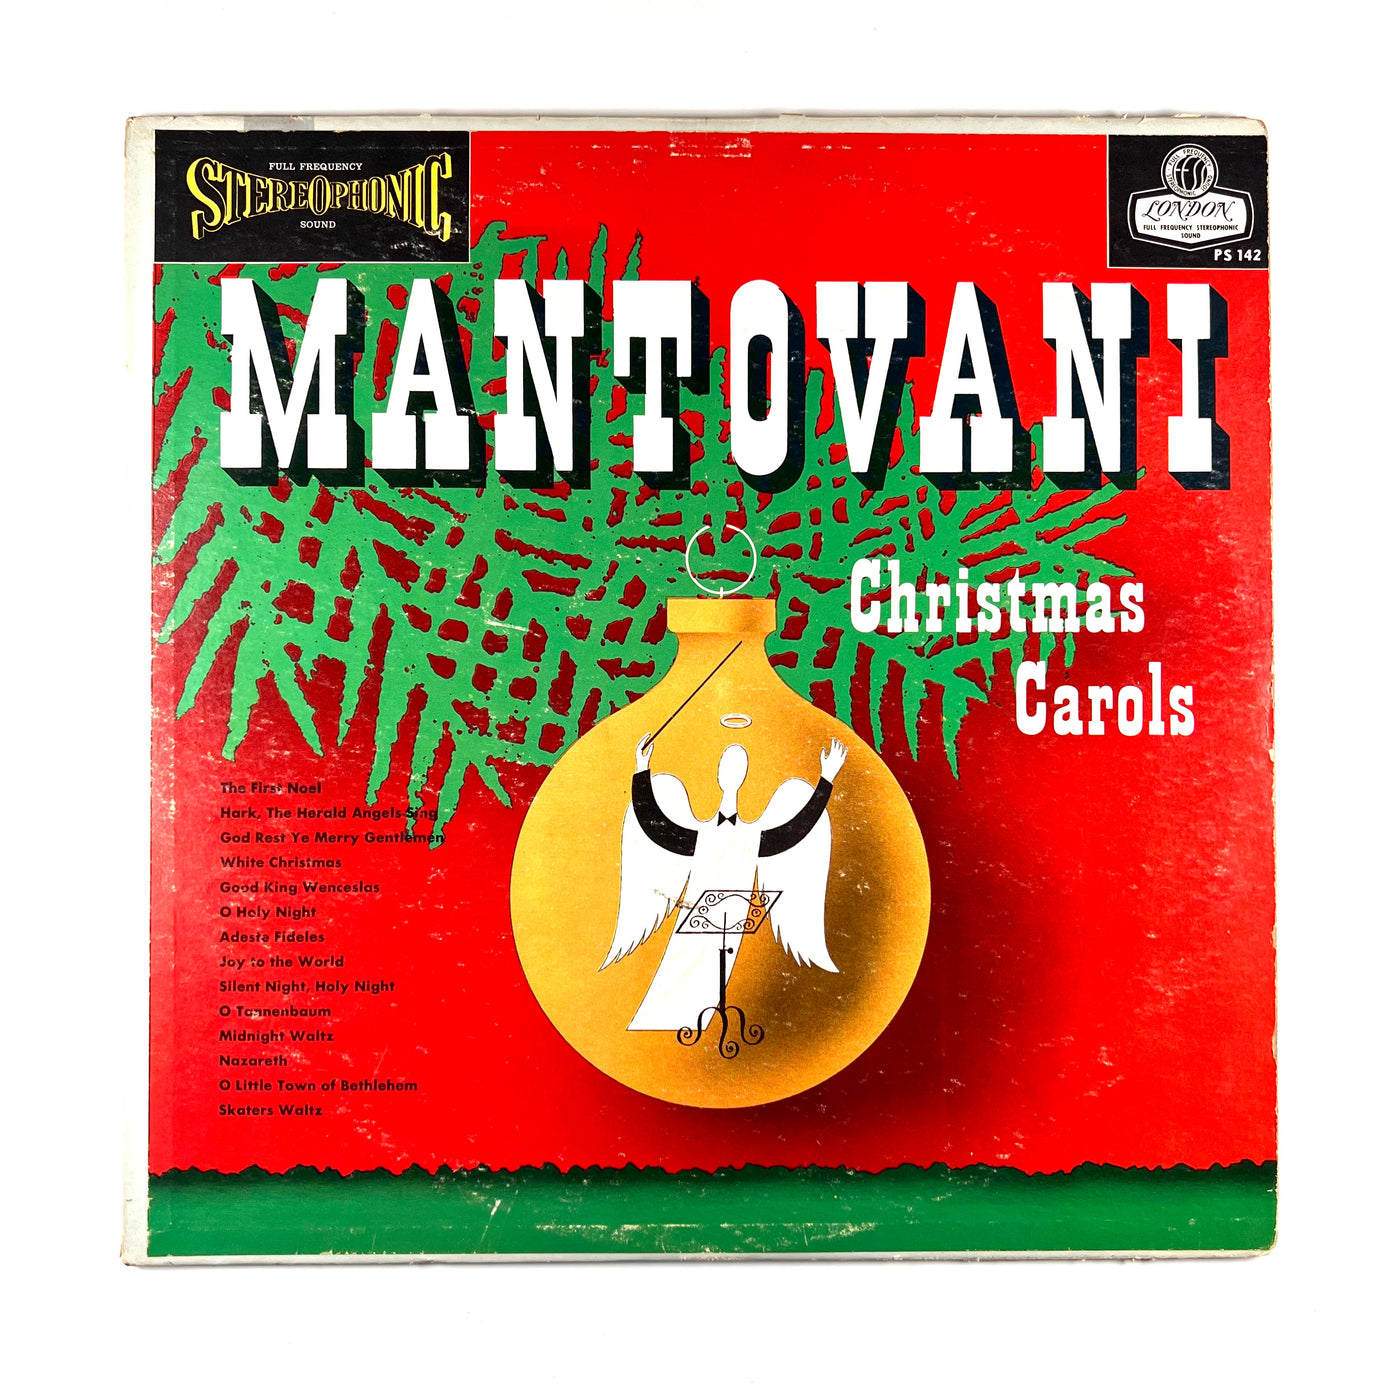 Mantovani And His Orchestra - Mantovani Christmas Carols